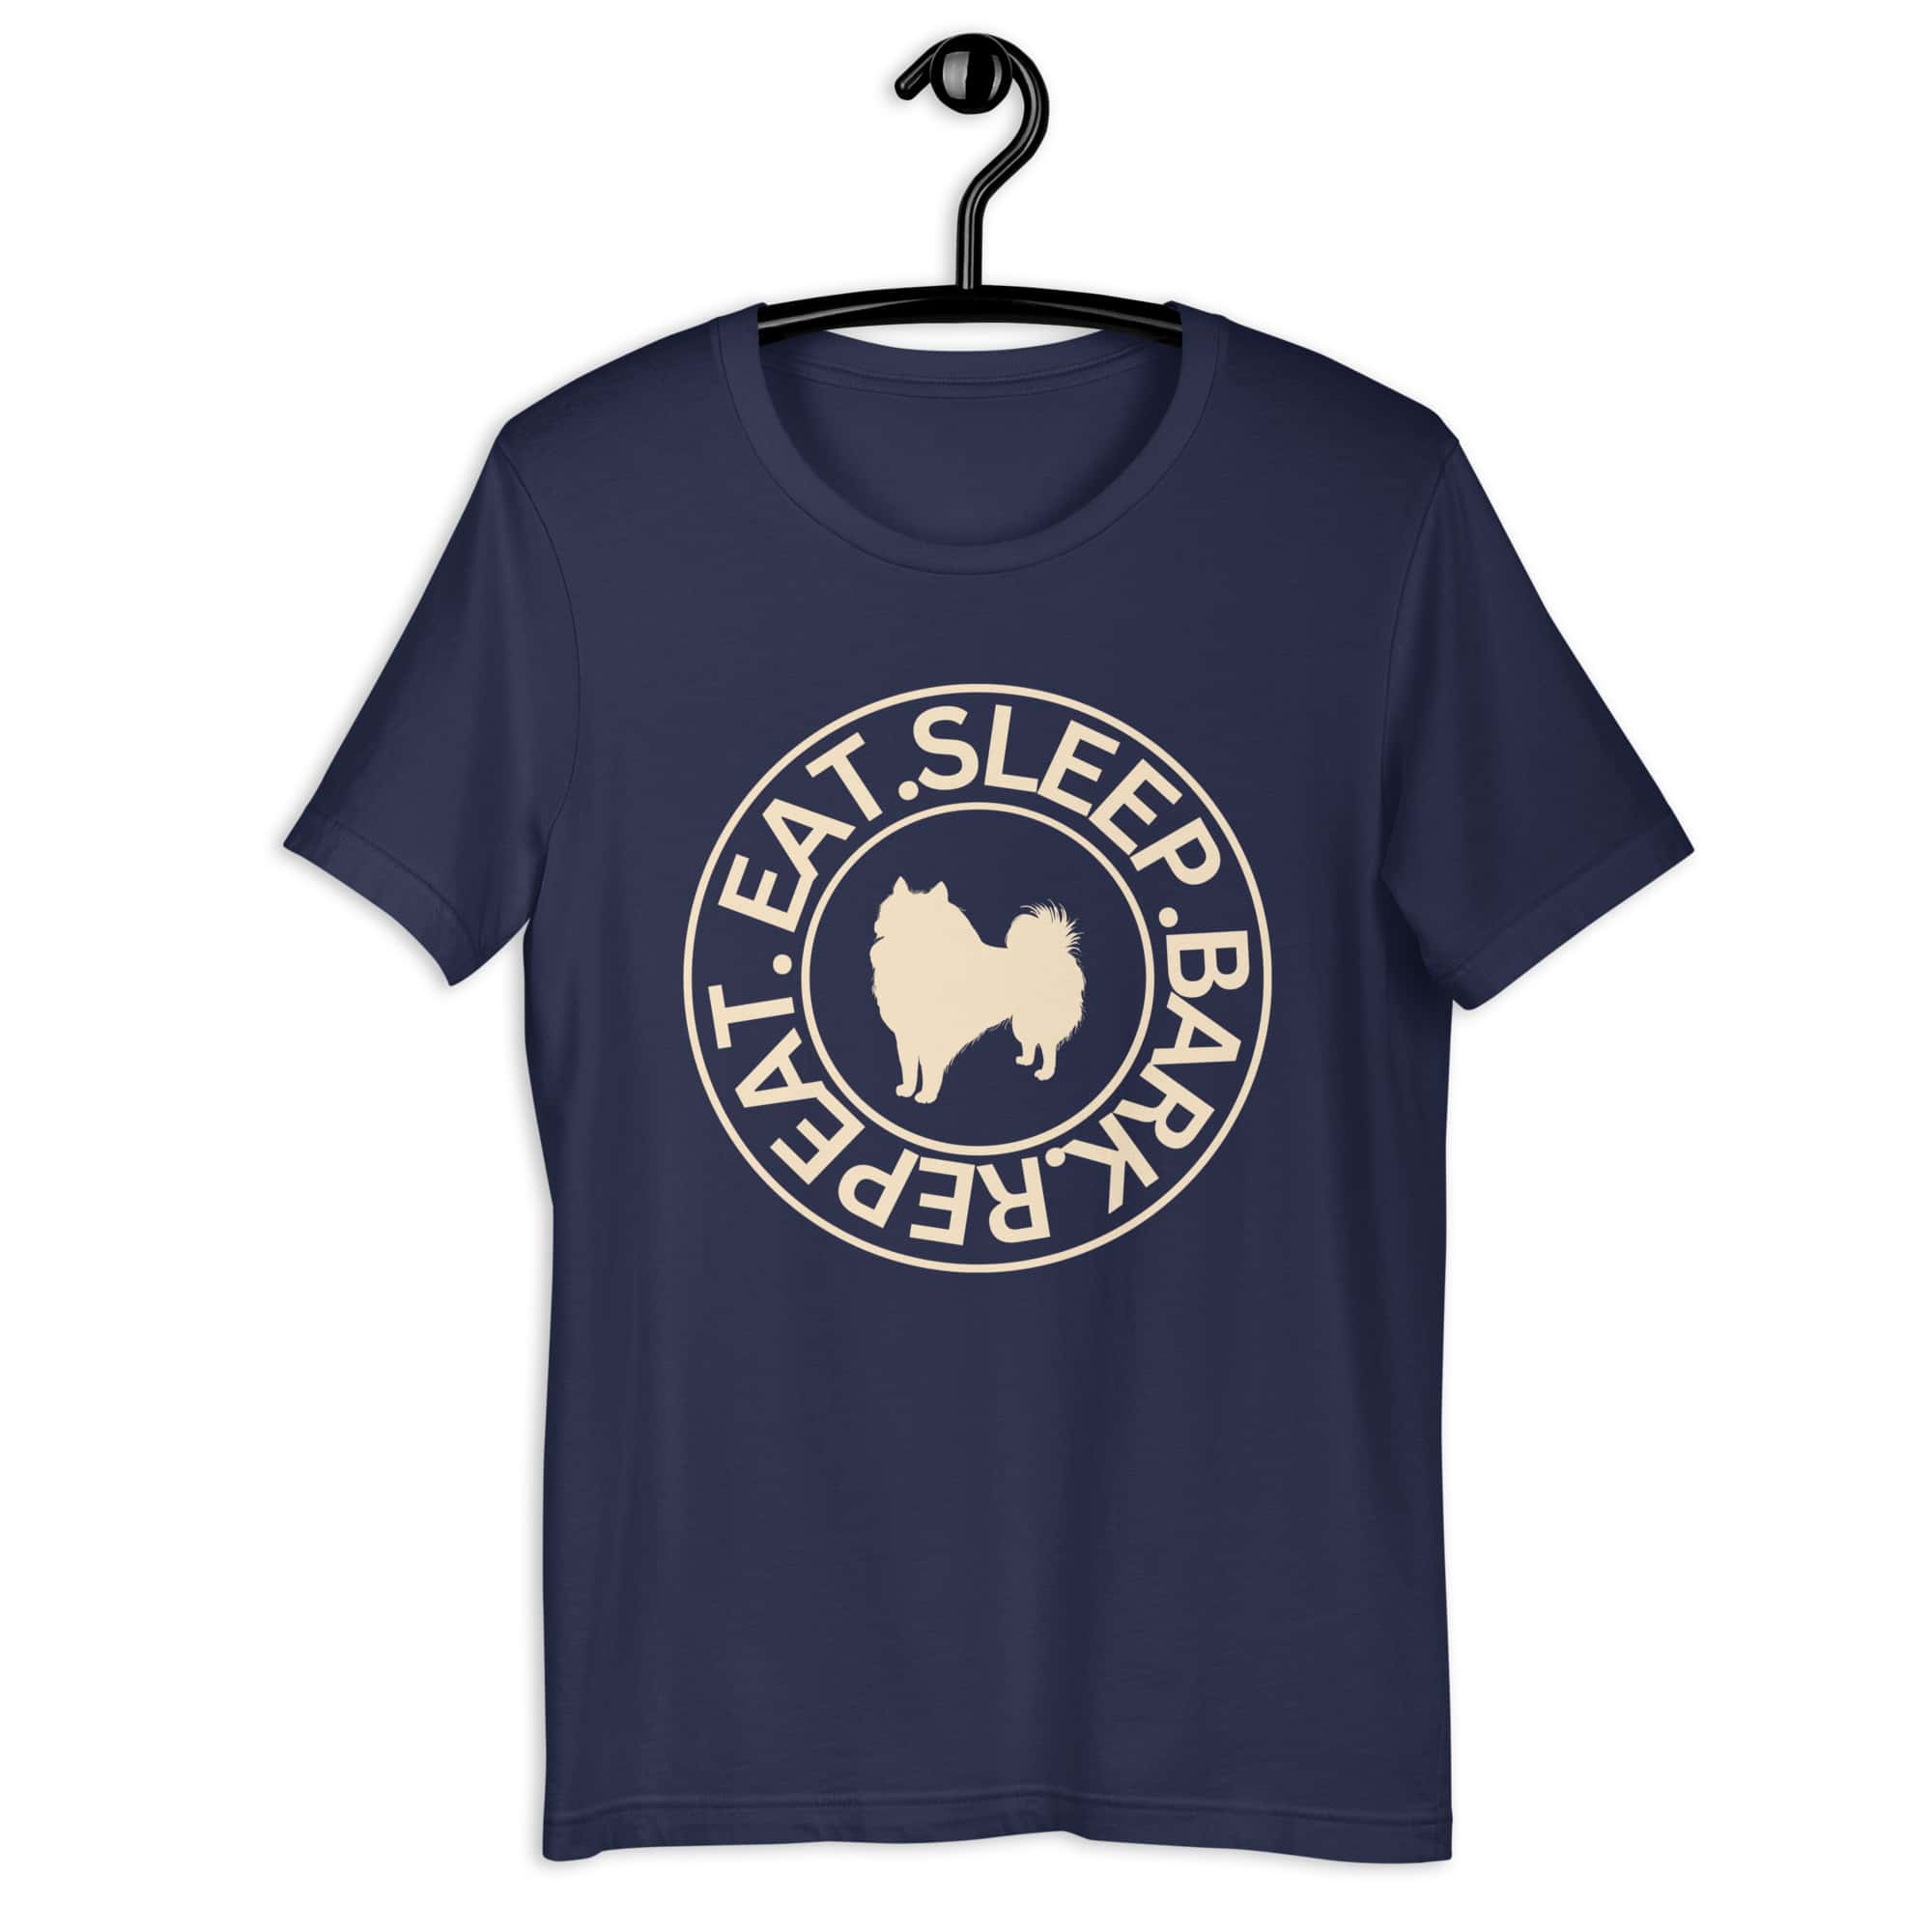 Eat Sleep Bark Repeat Poodle Unisex T-Shirt. Navy